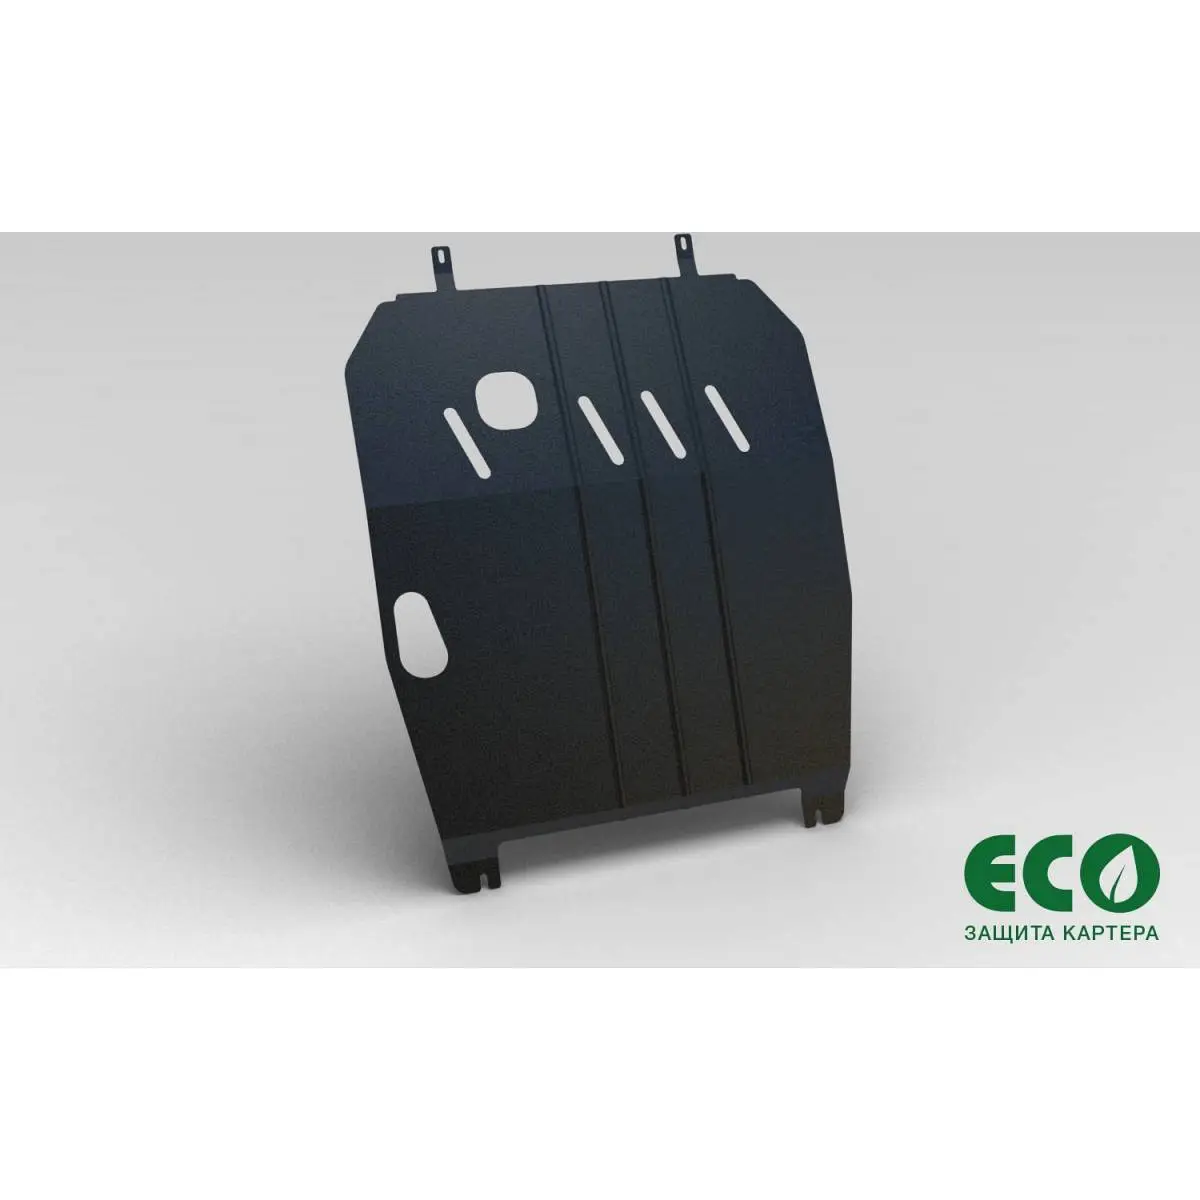 Комплект защиты картера и крепеж Eco 5X5Y25N 1437099113 E0E 4RG eco3530020 изображение 0